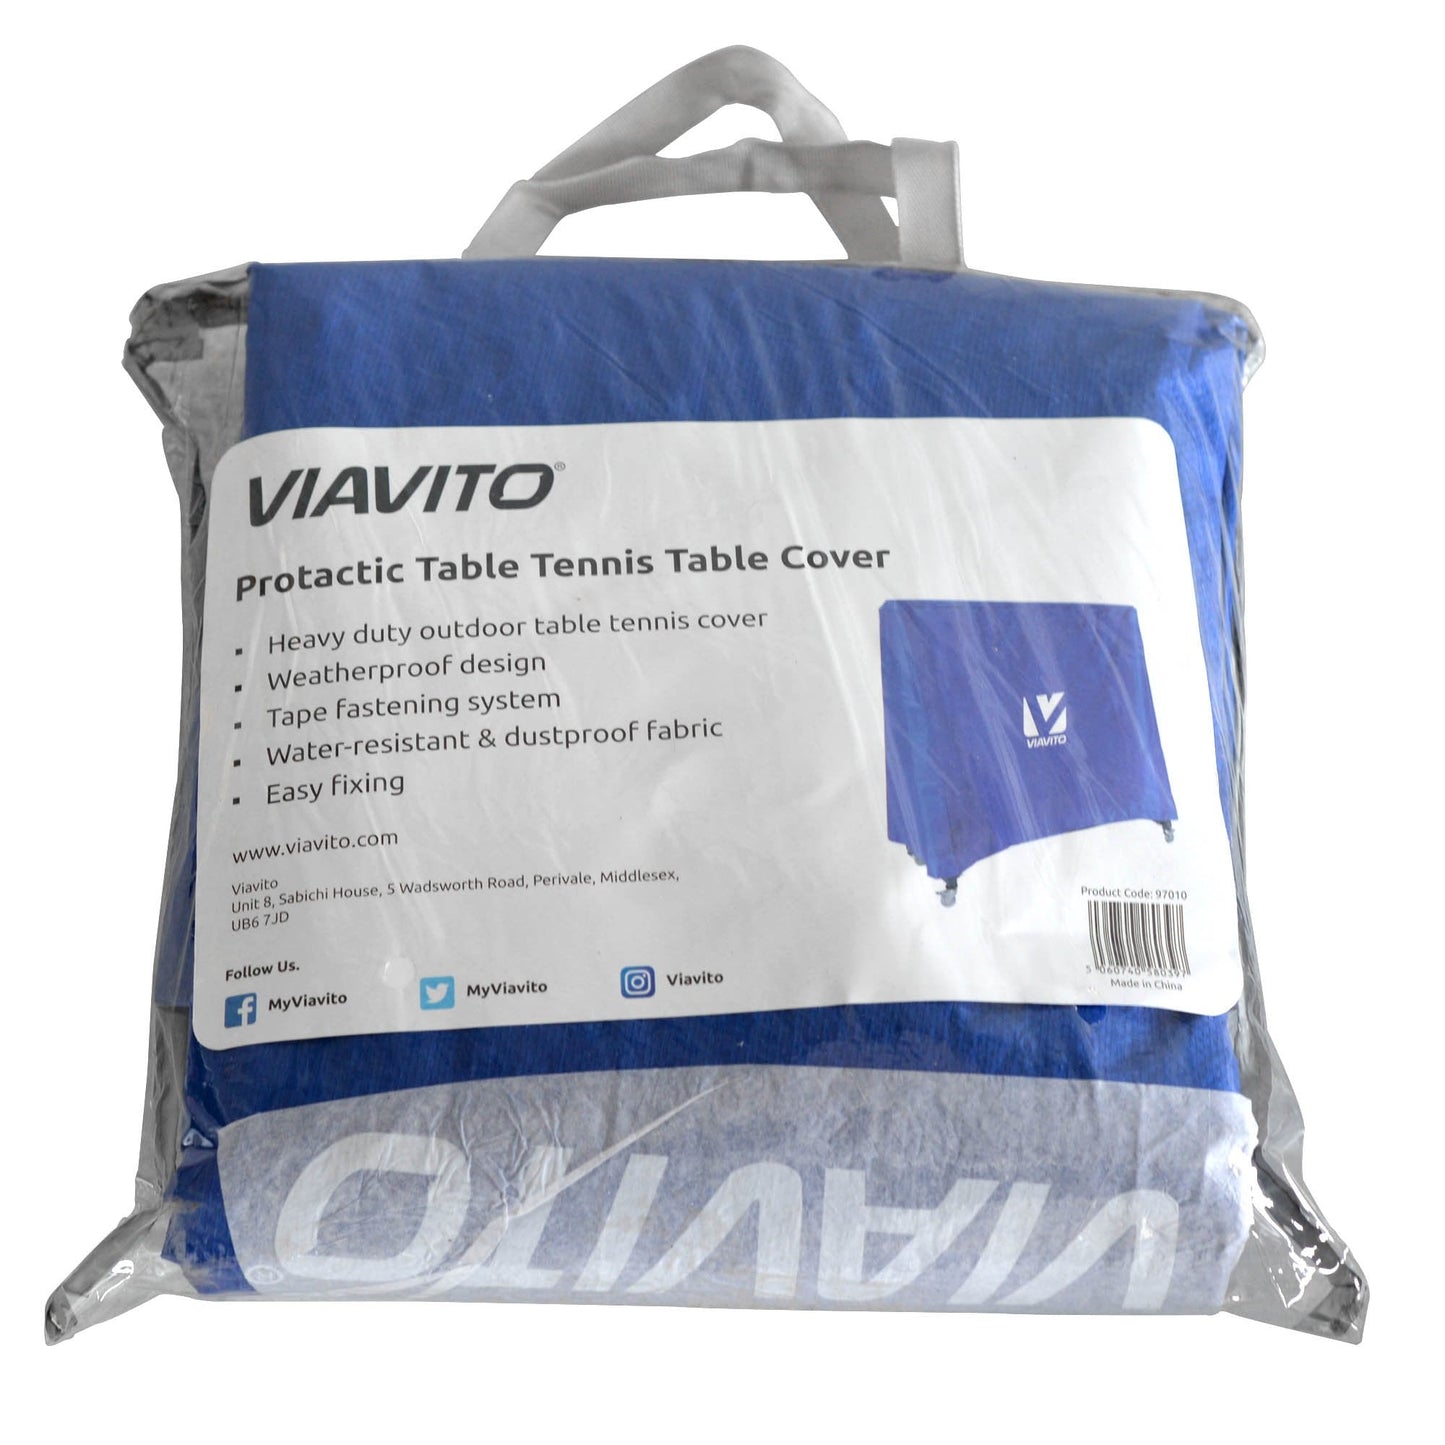 |Viavito Protactic Table Tennis Table Cover - Plastic Bag|